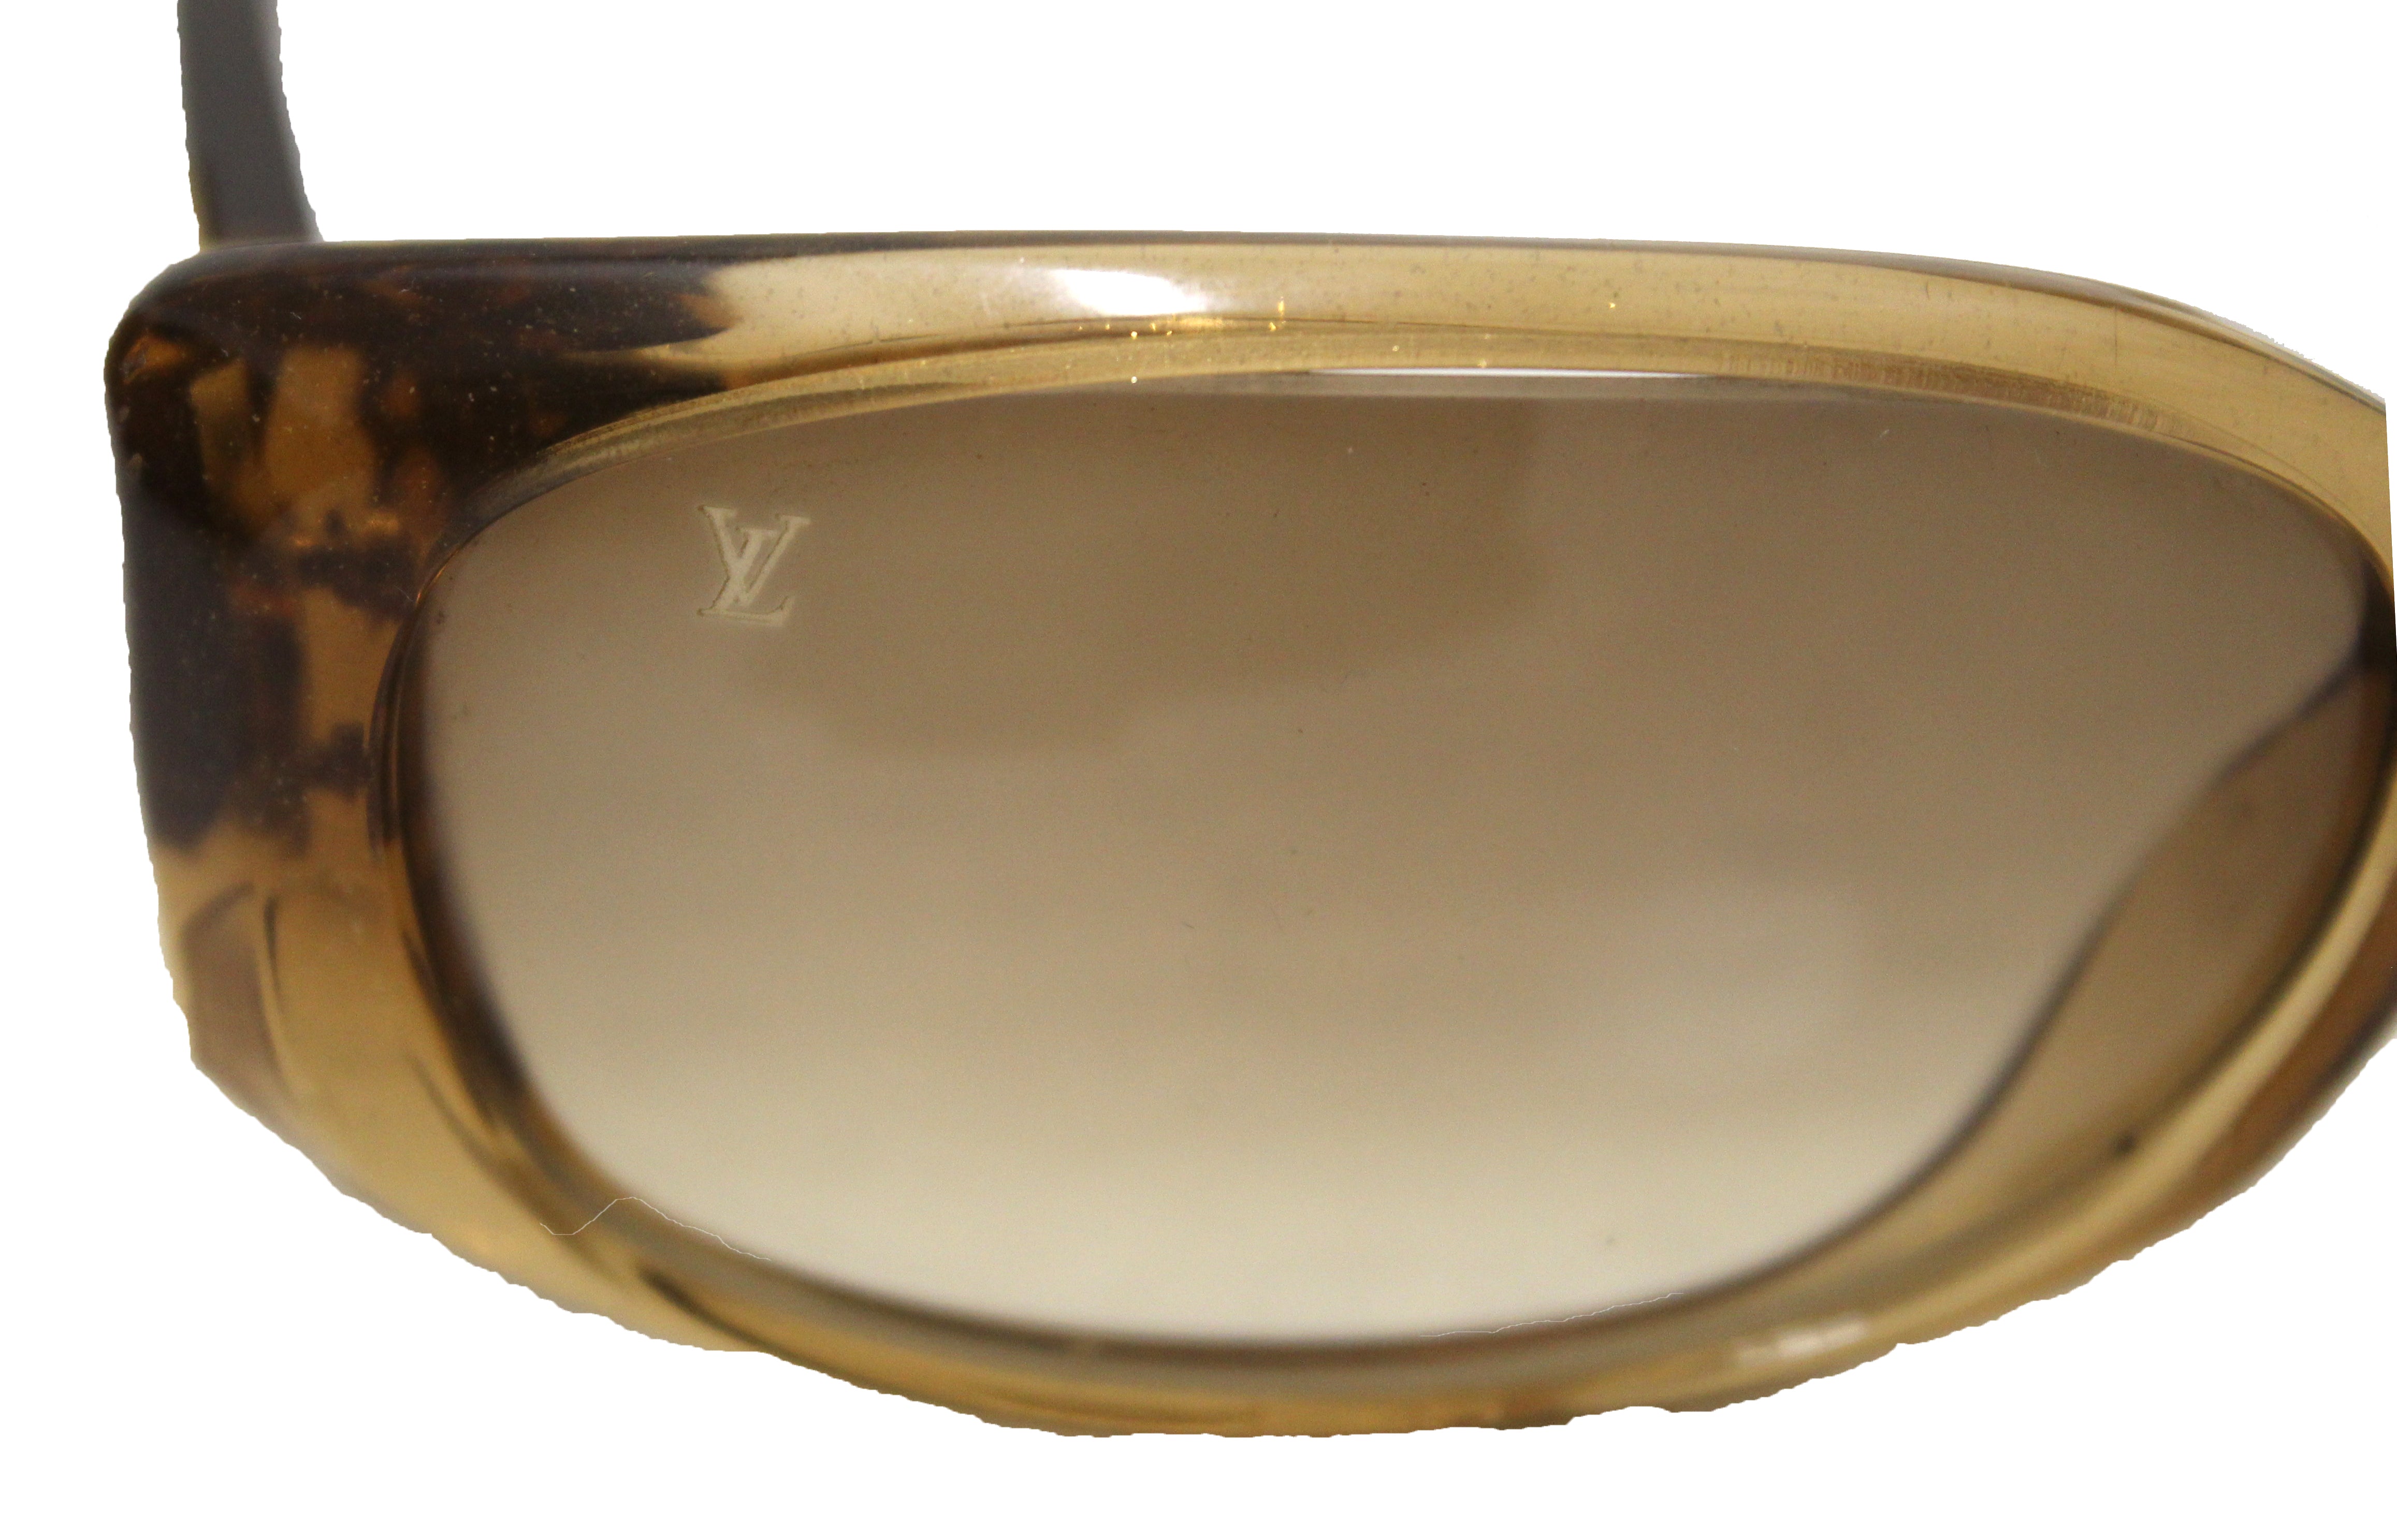 Sunglasses Louis Vuitton Brown in Plastic - 36420241